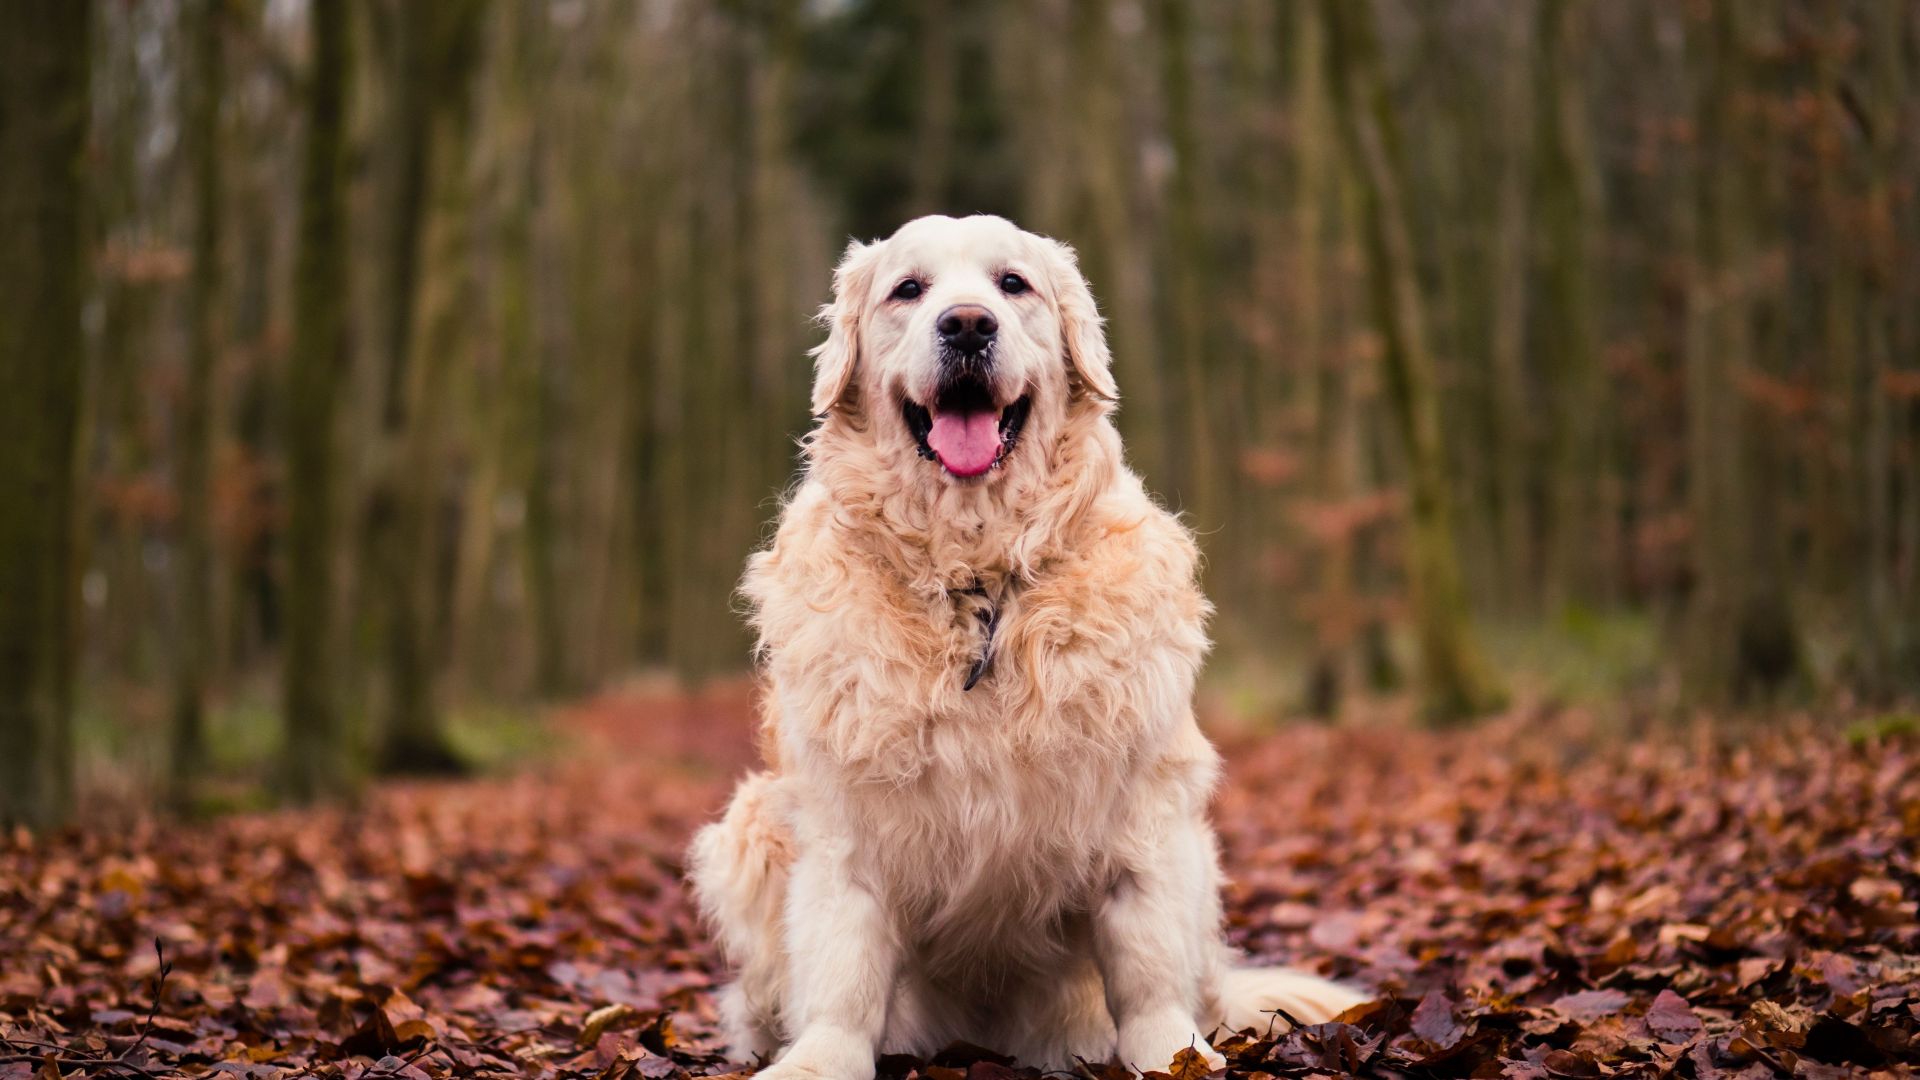 Wallpaper Dog, Golden Retriever, sitting, autumn, foliage, 5k